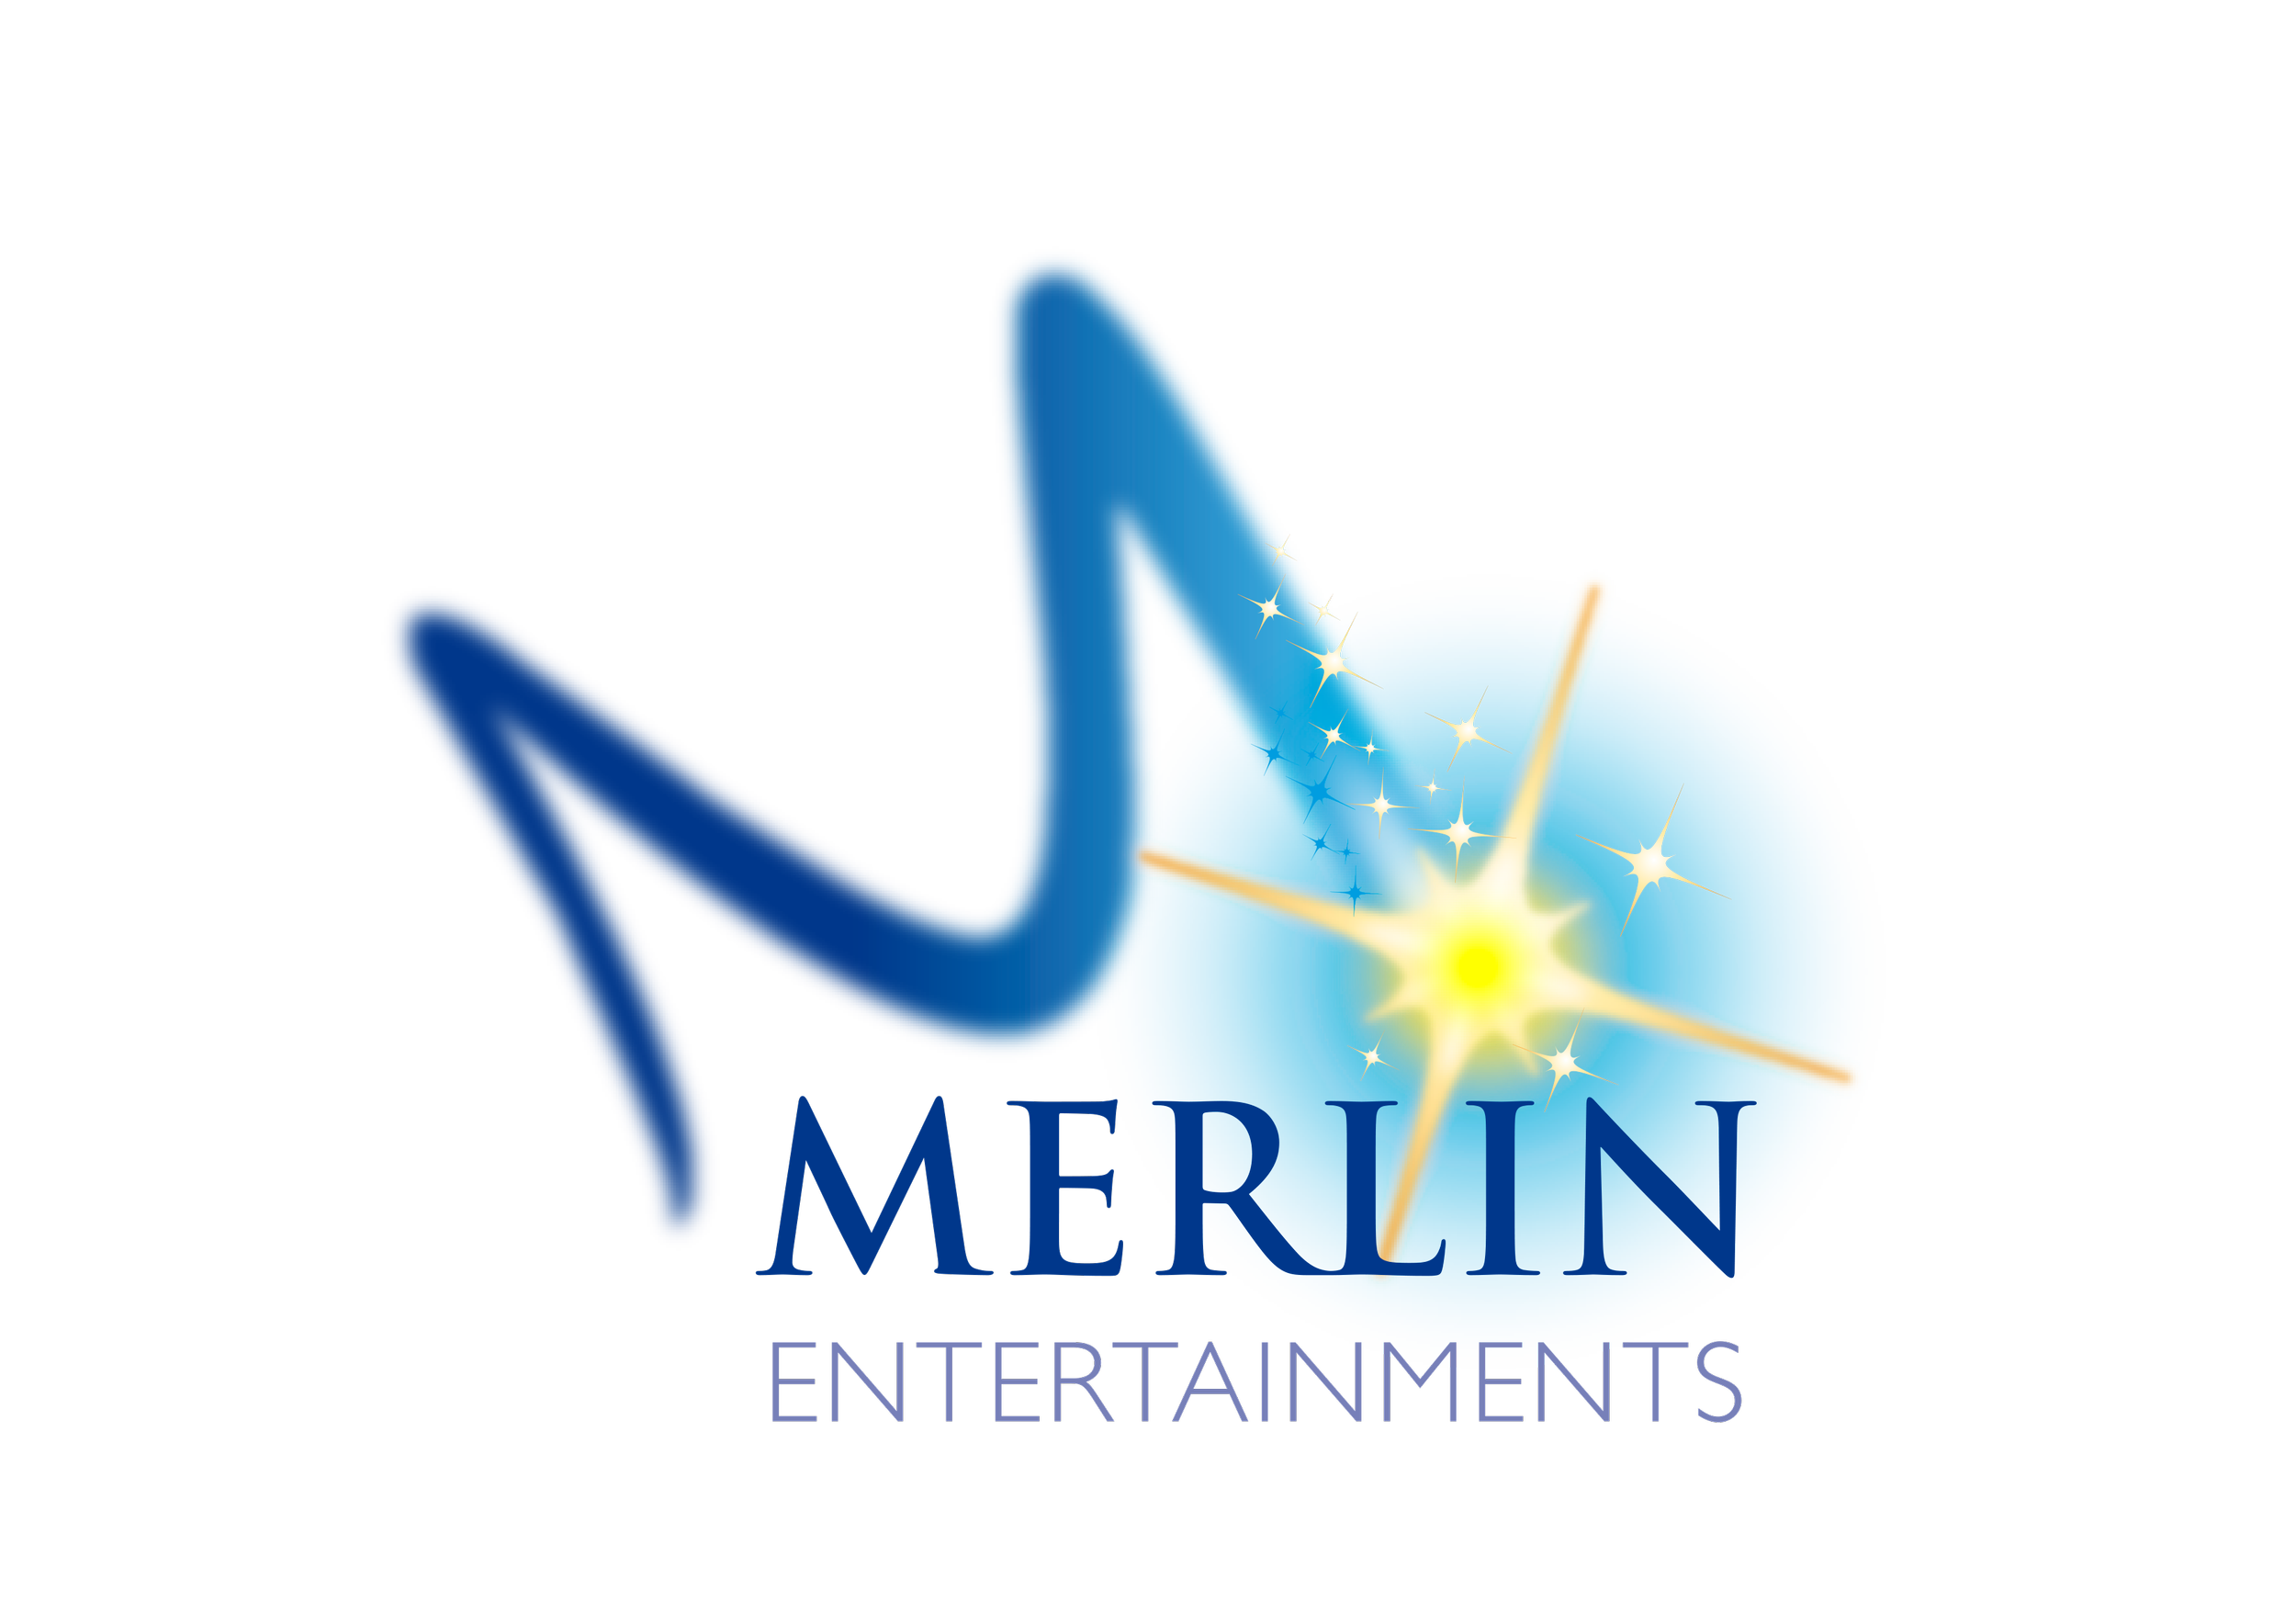 Merlin Entertainment company logo